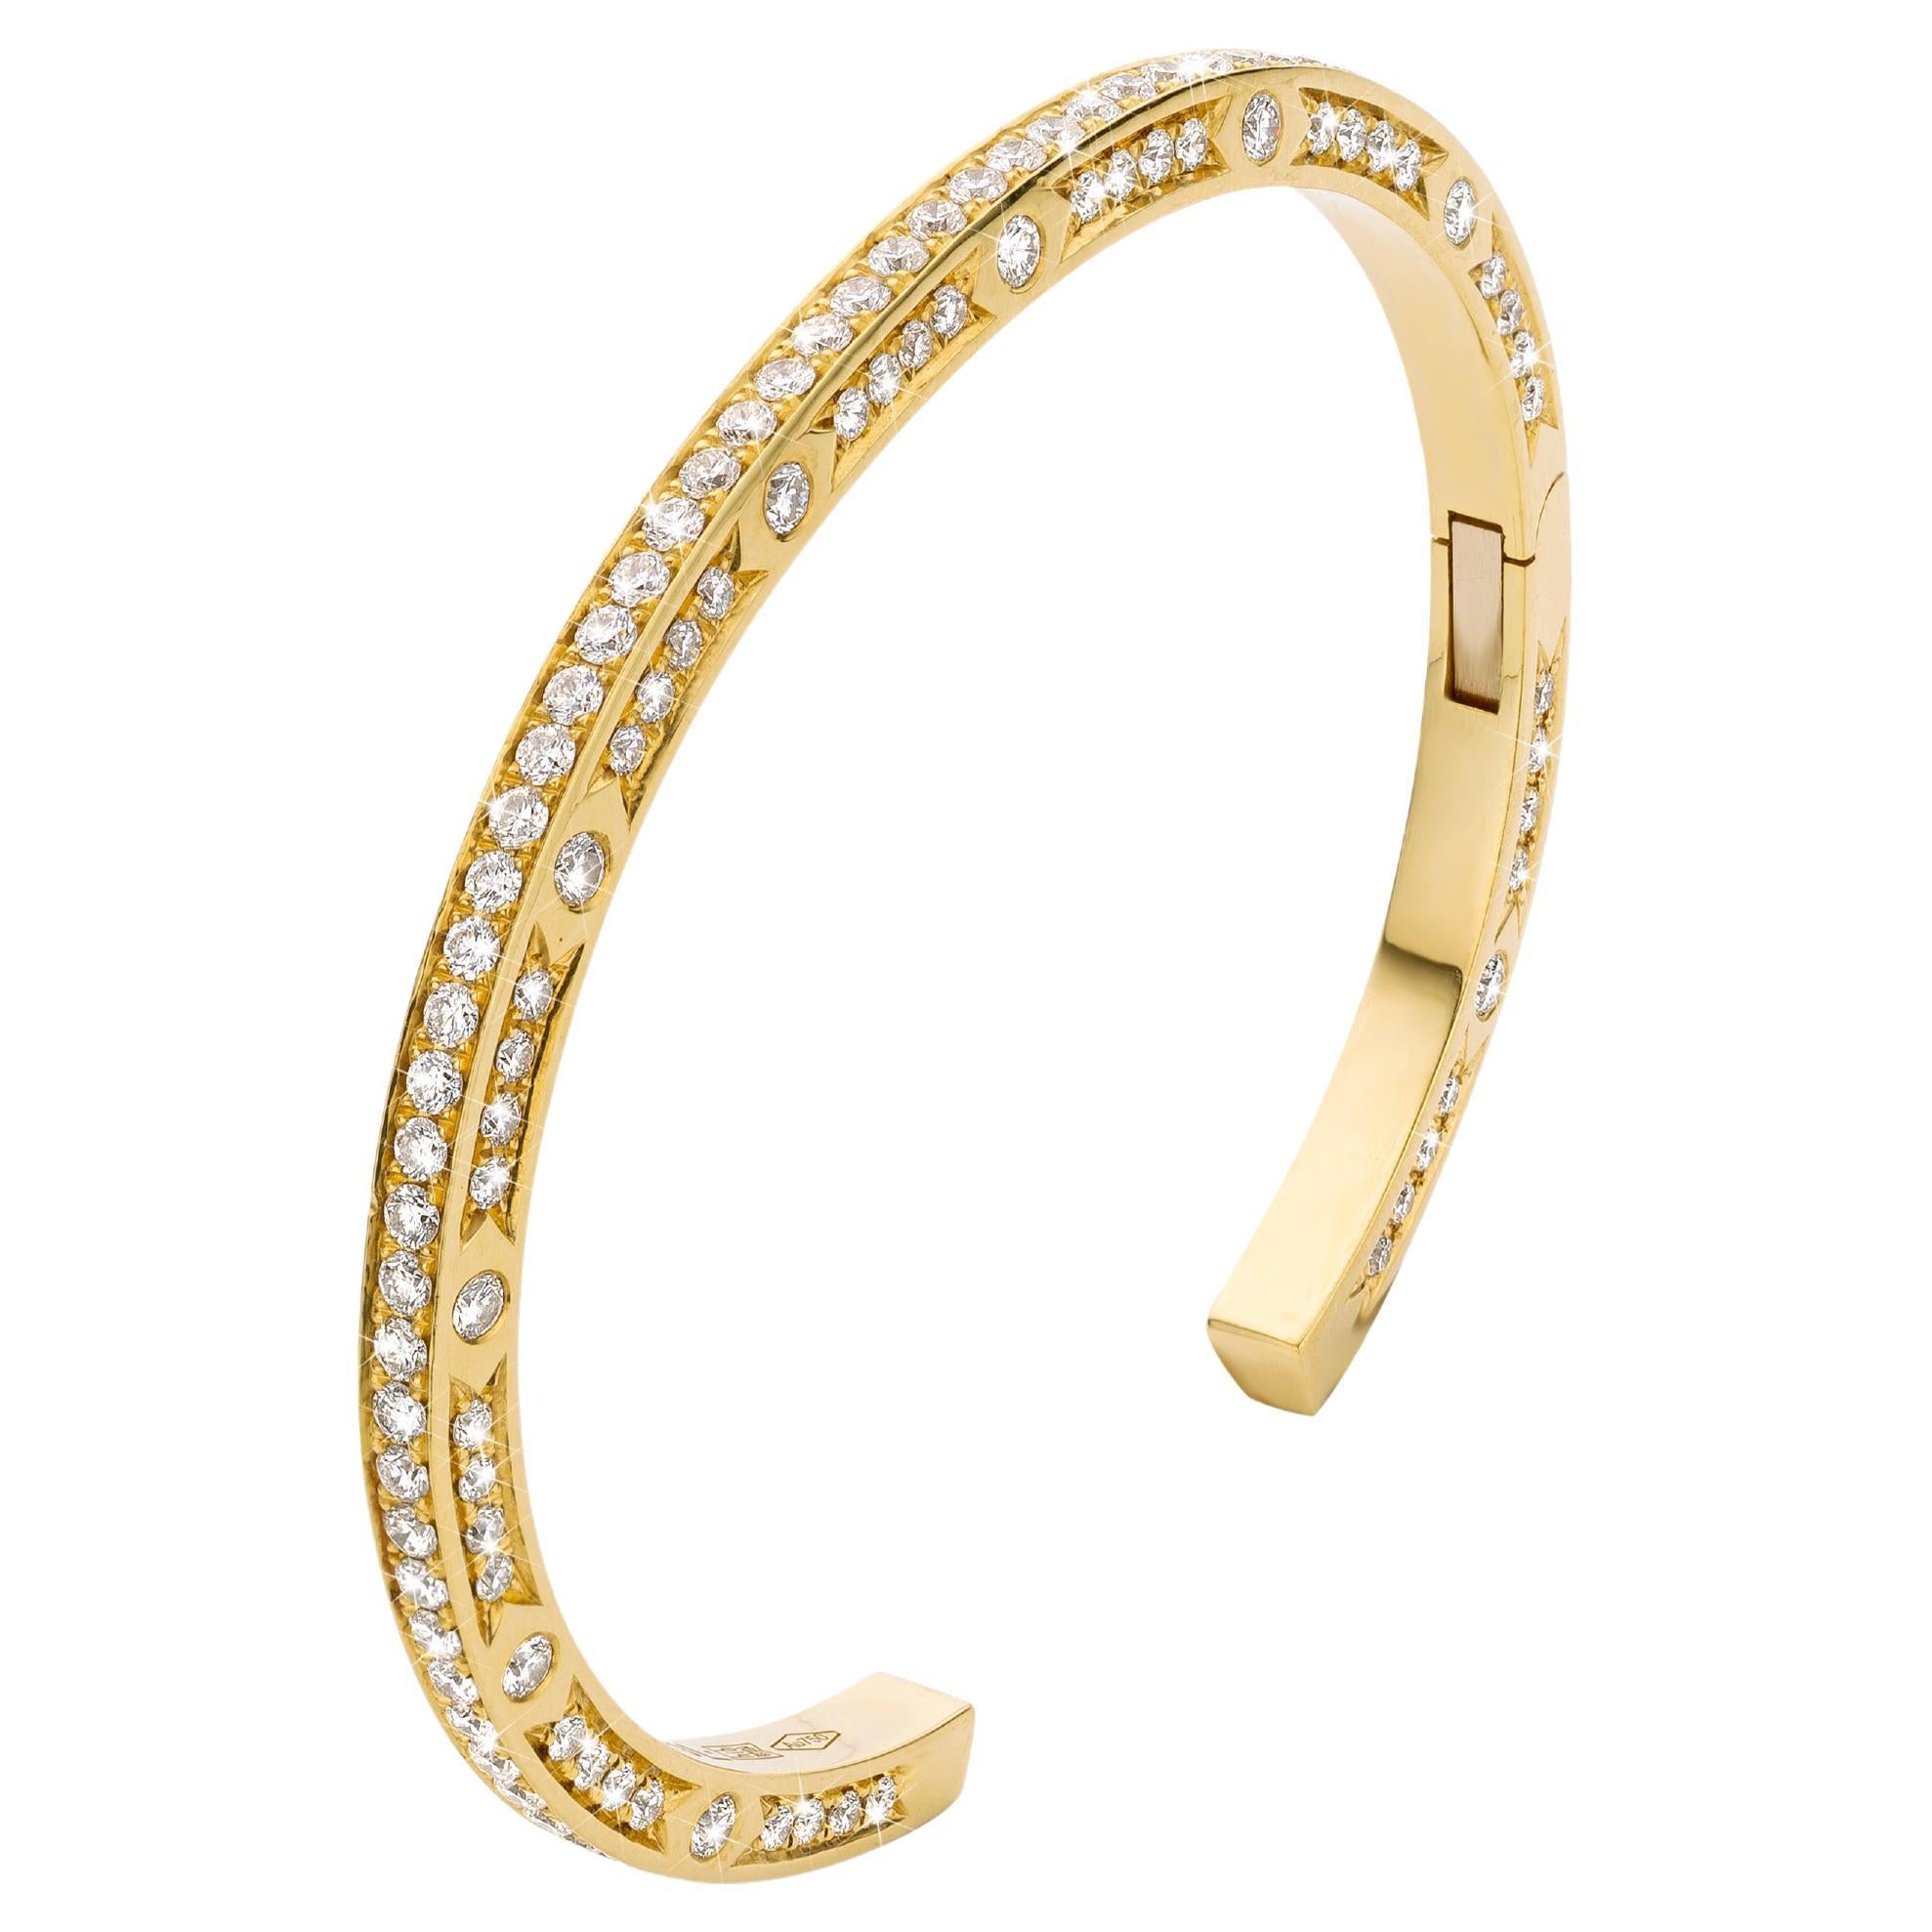 18K Yellow Gold 4.21 Carat White Diamonds Bracelet by Jochen Leën For Sale